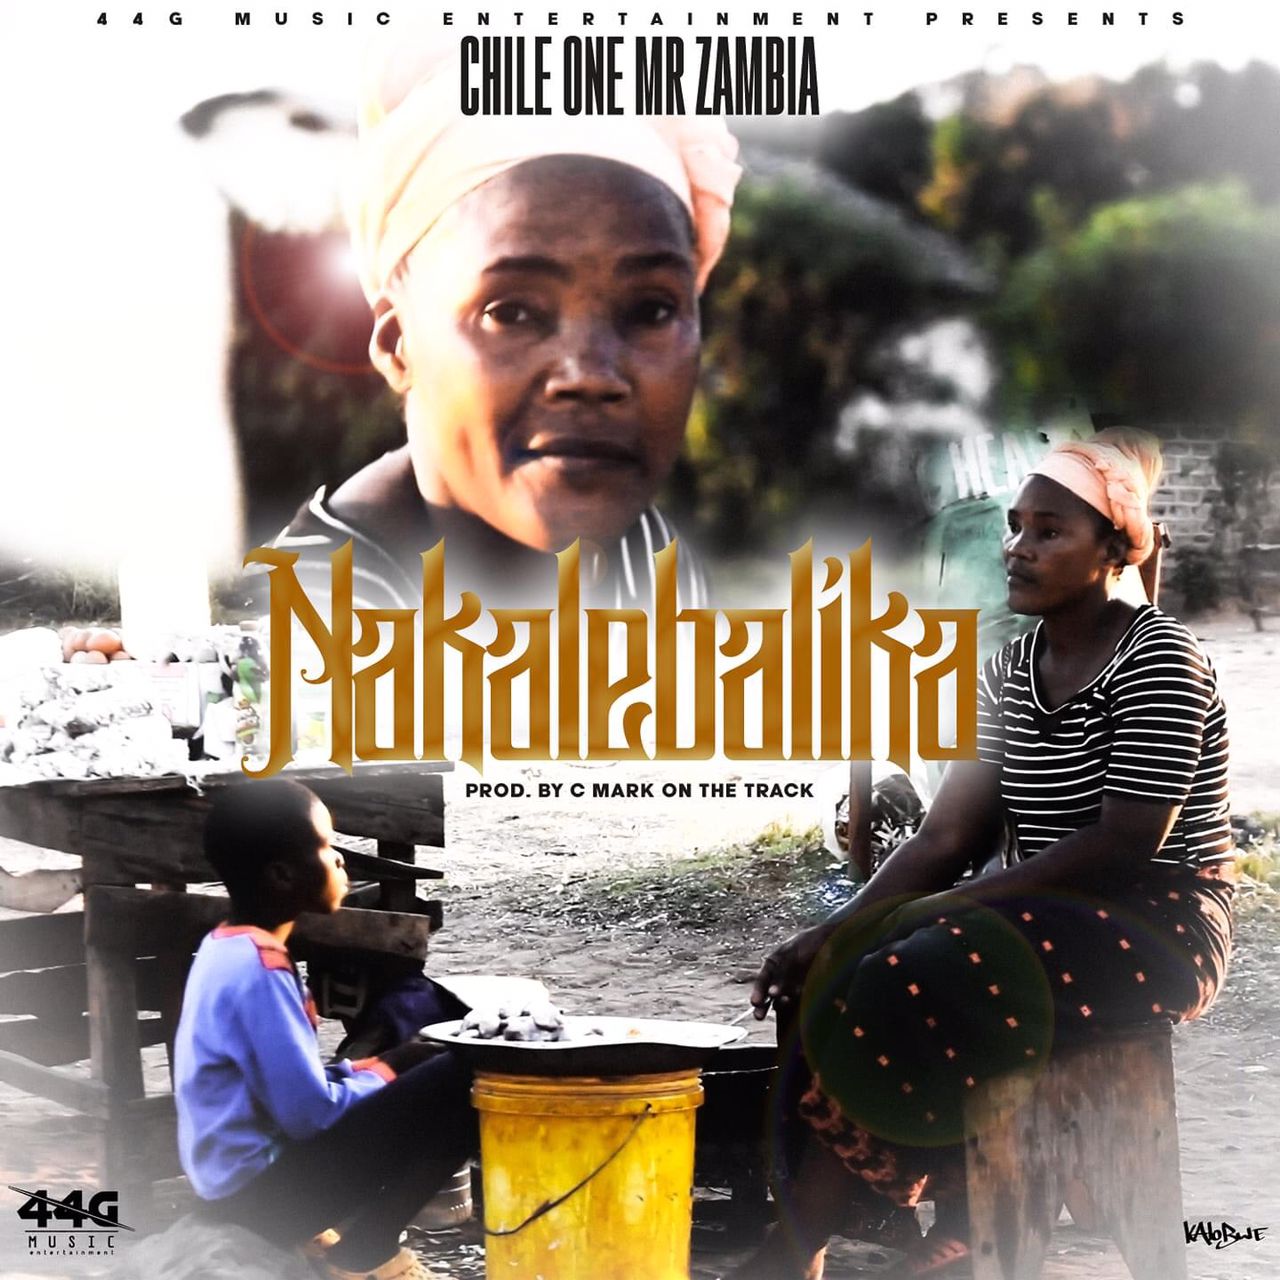 Chile one nakalebalika mp3 download